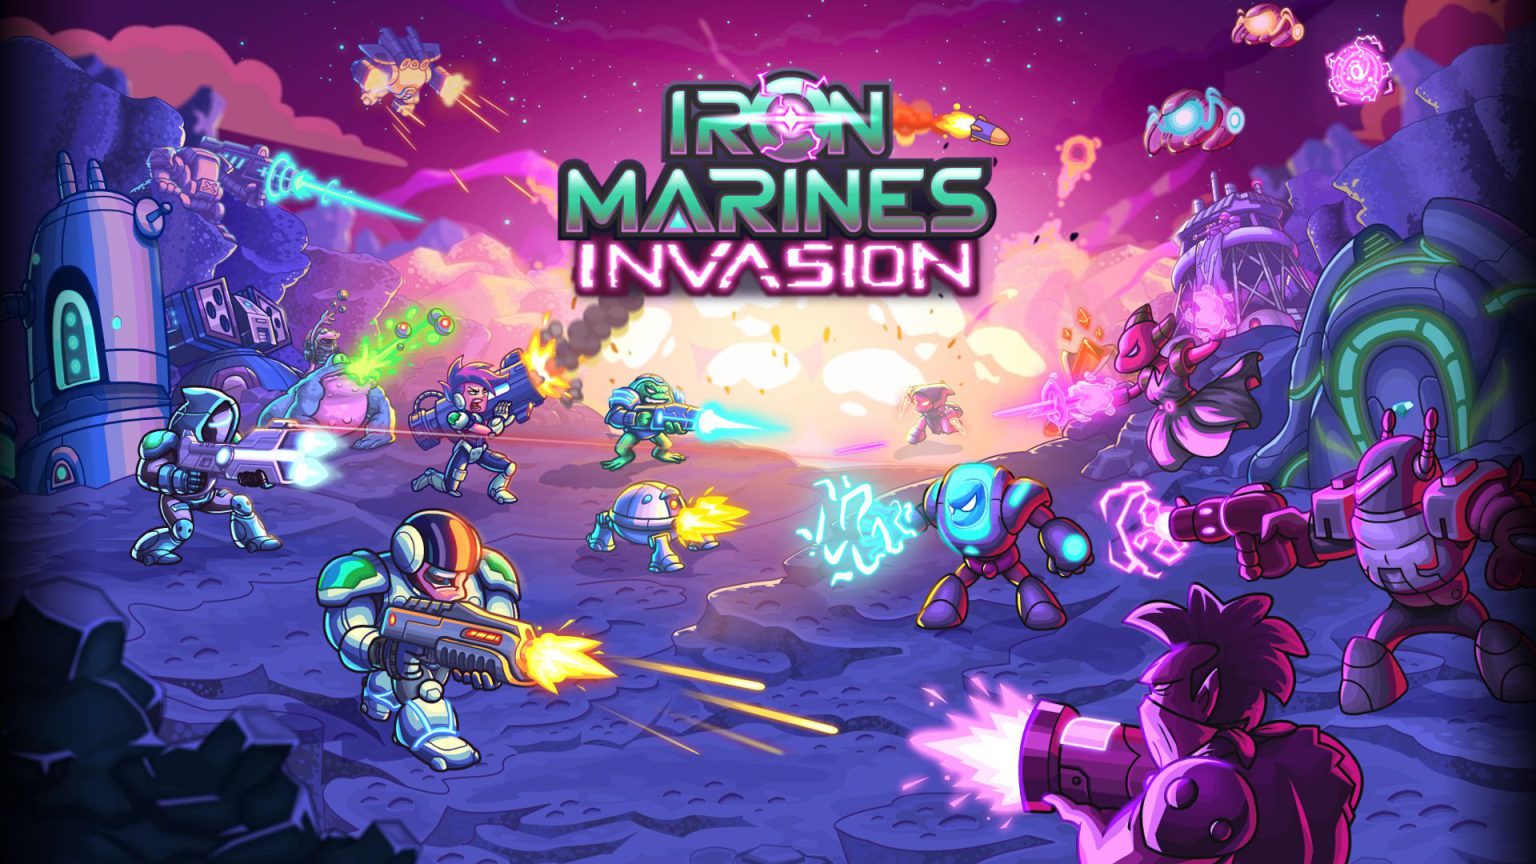 iron marines invasion